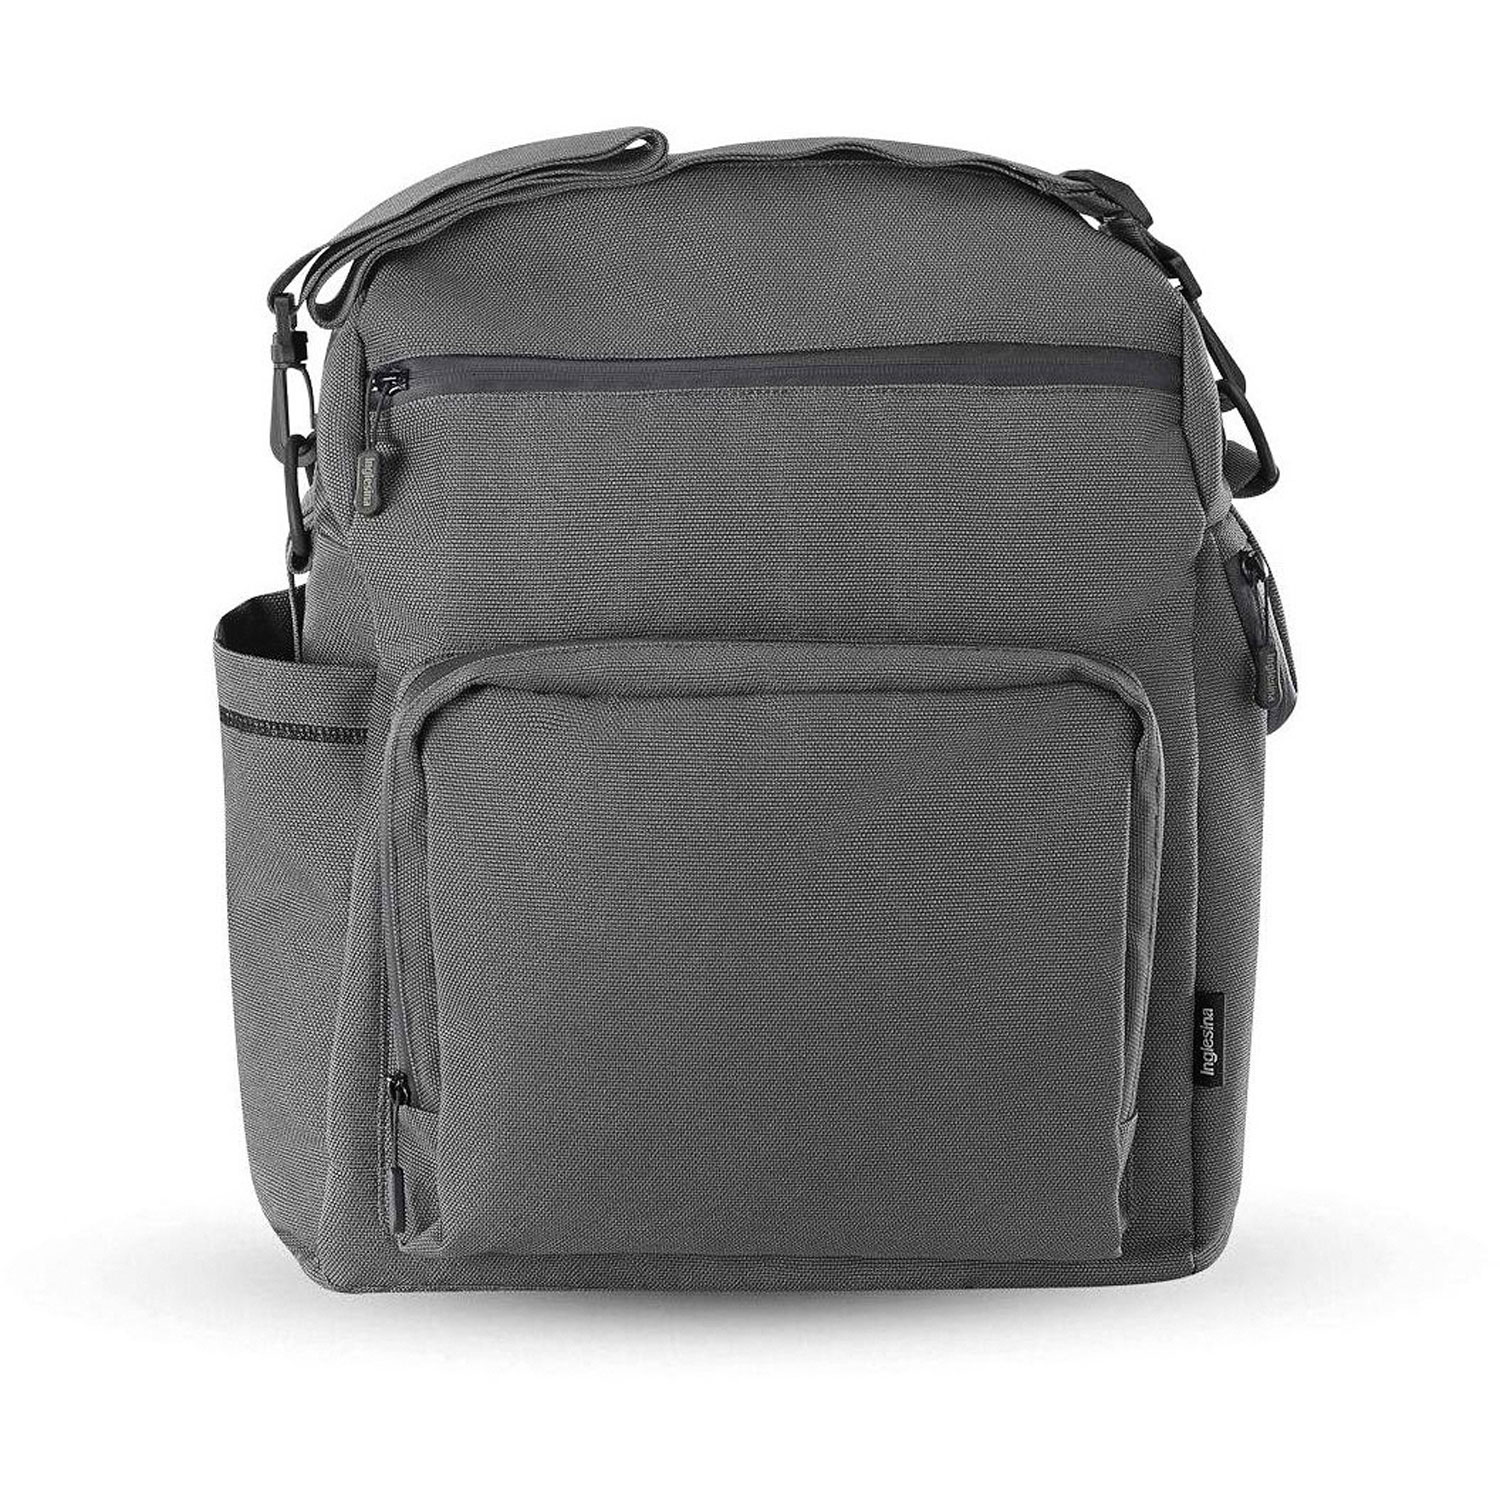 Сумка-рюкзак для коляски ADVENTURE BAG, цвет CHARCOAL GREY (2021) Inglesina inglesina сумка для коляски quad day bag